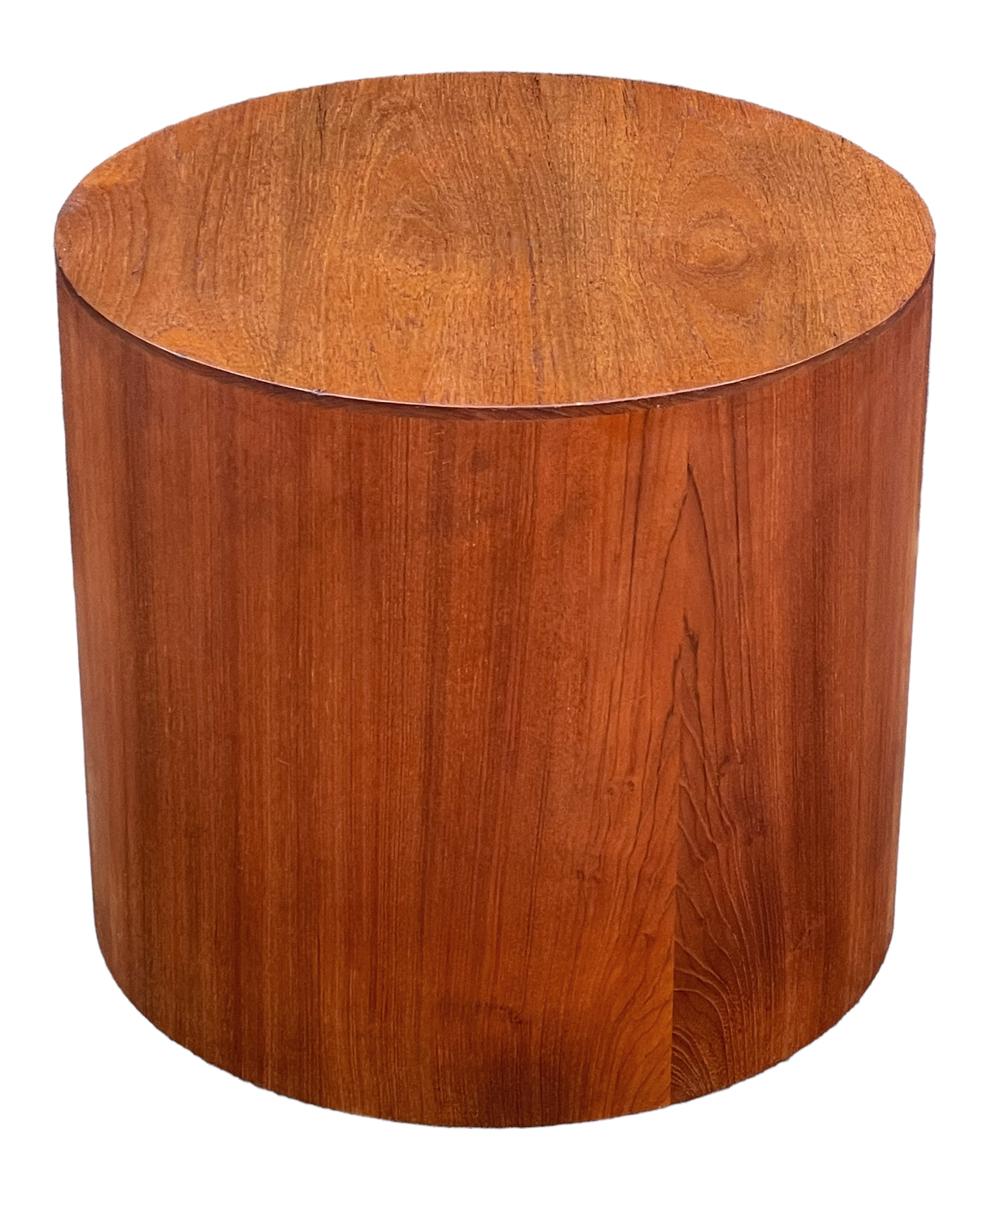 Scandinavian Modern Mid Century Danish Modern Round Circular Teak Drum Table as Side or Coffee Table For Sale